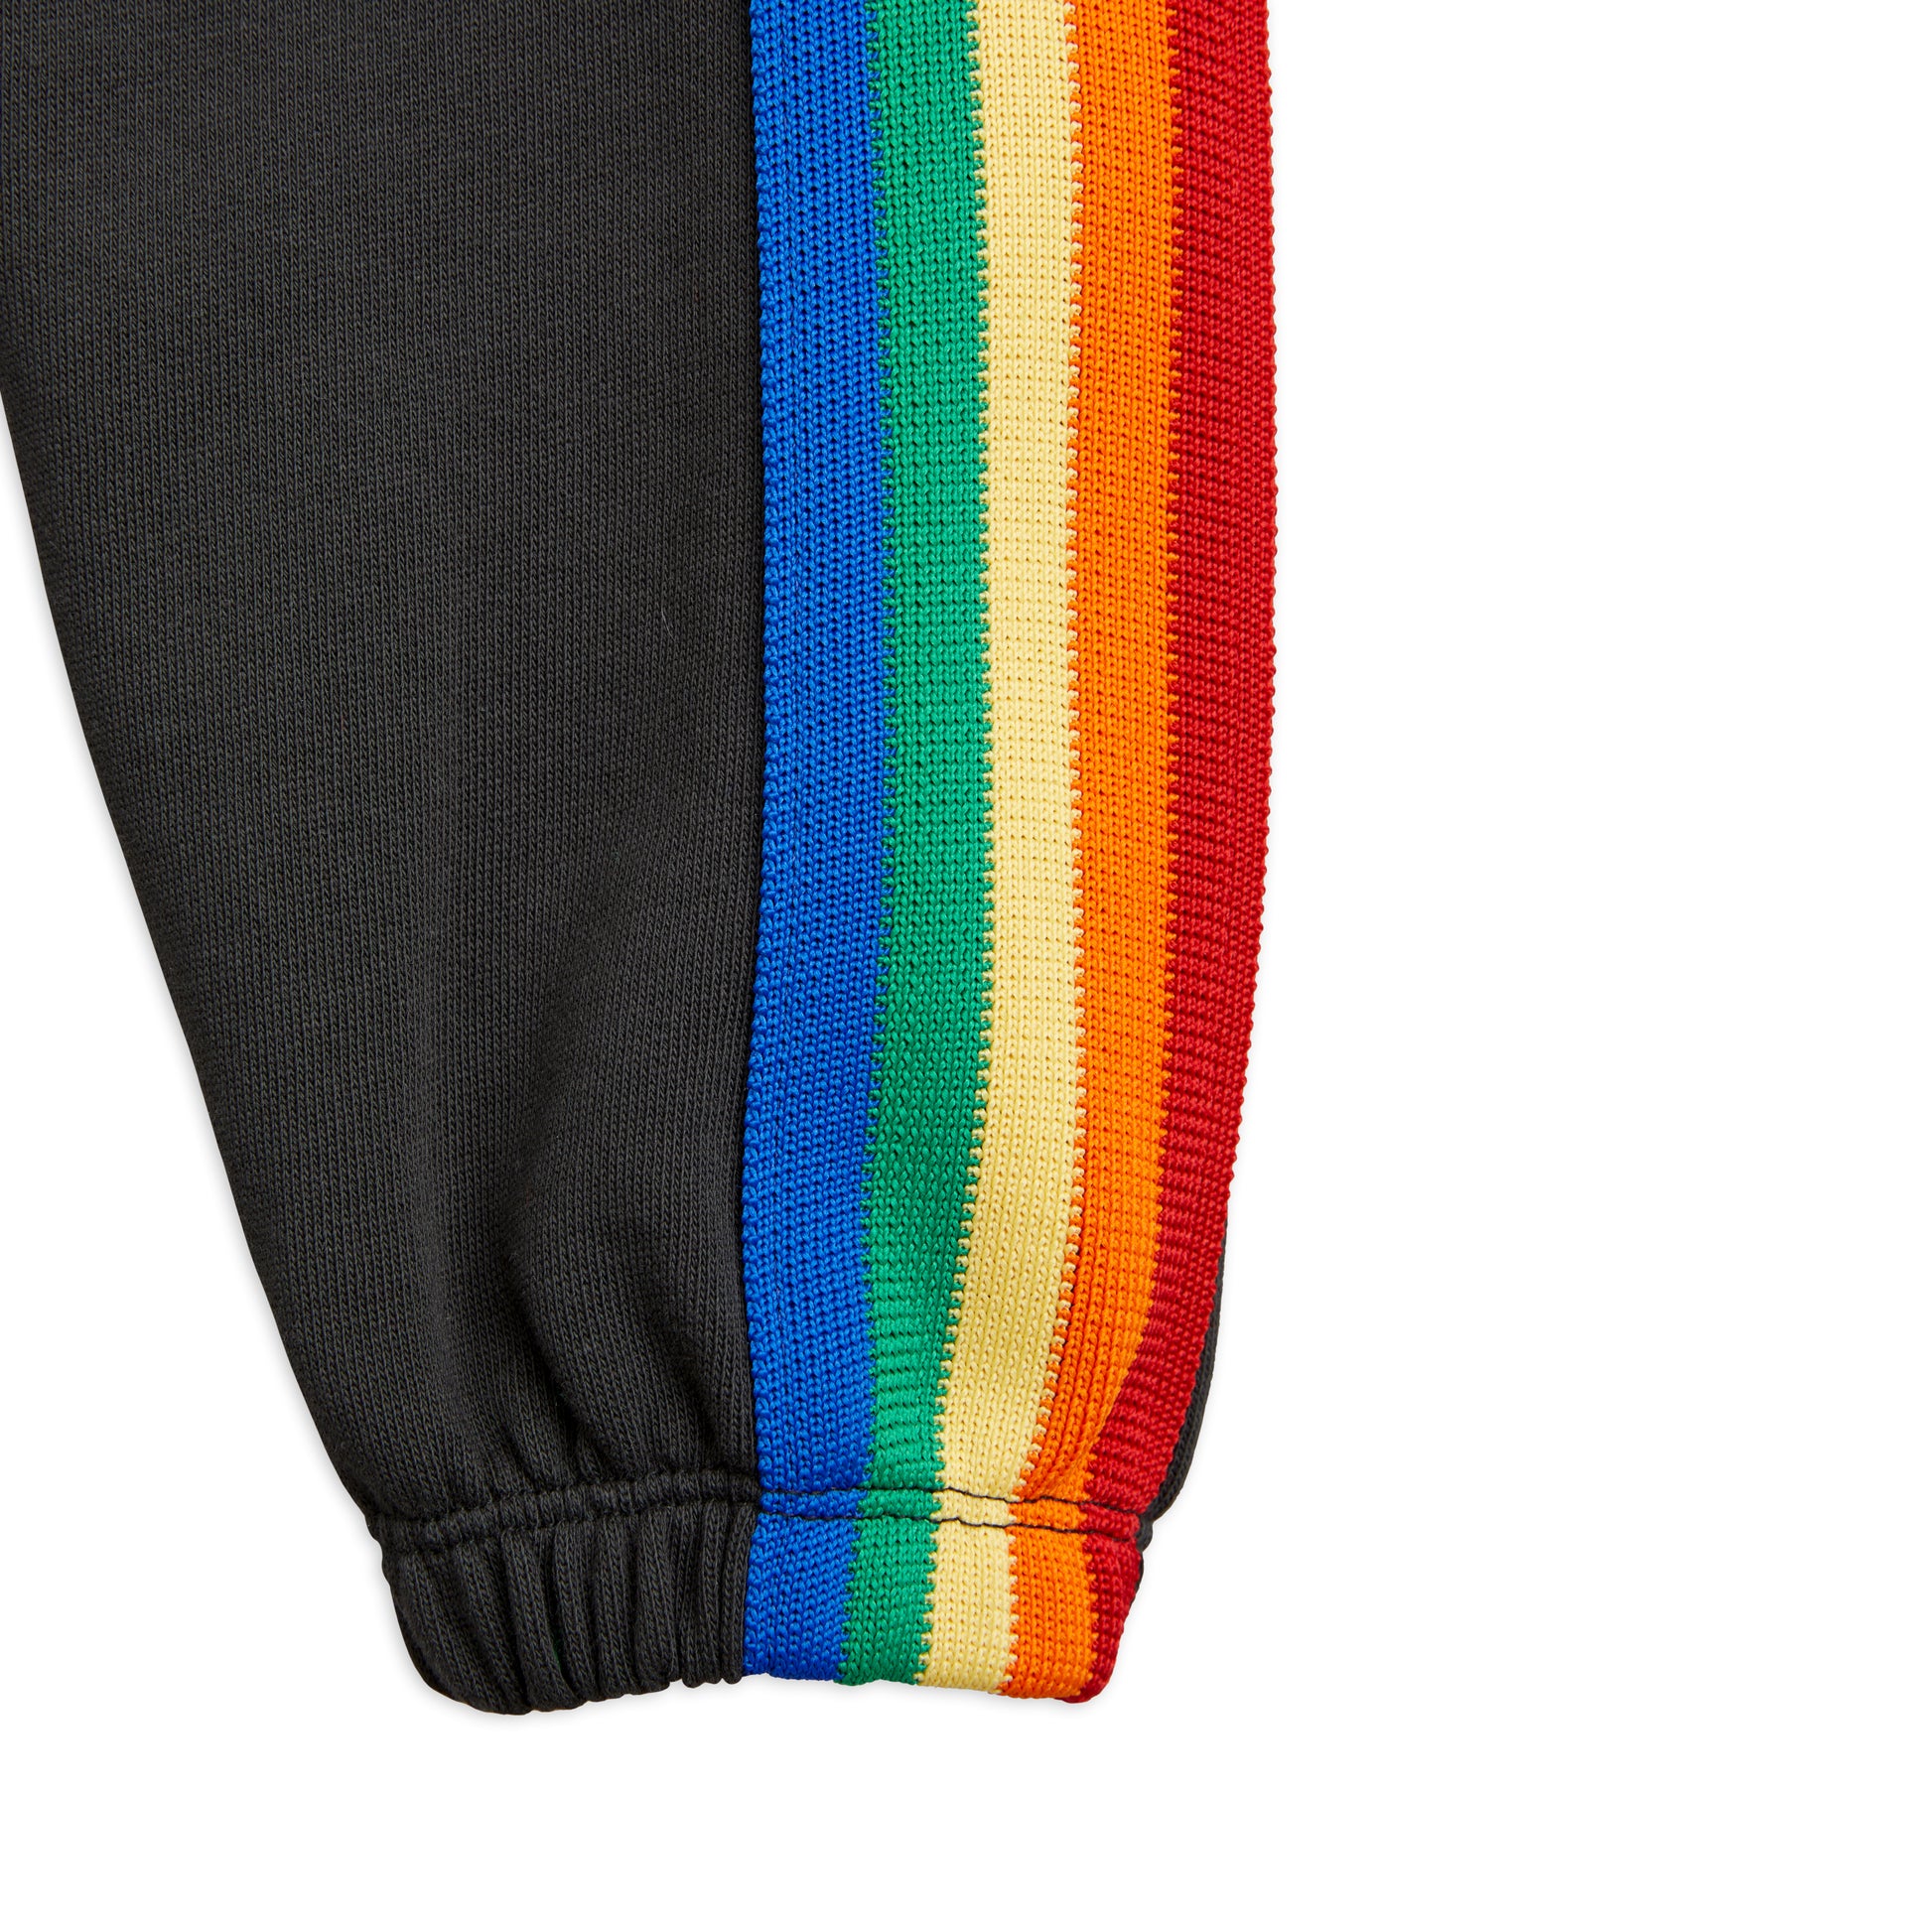 MINI RODINI Rainbow Stripe Sweatpants ALWAYS SHOW